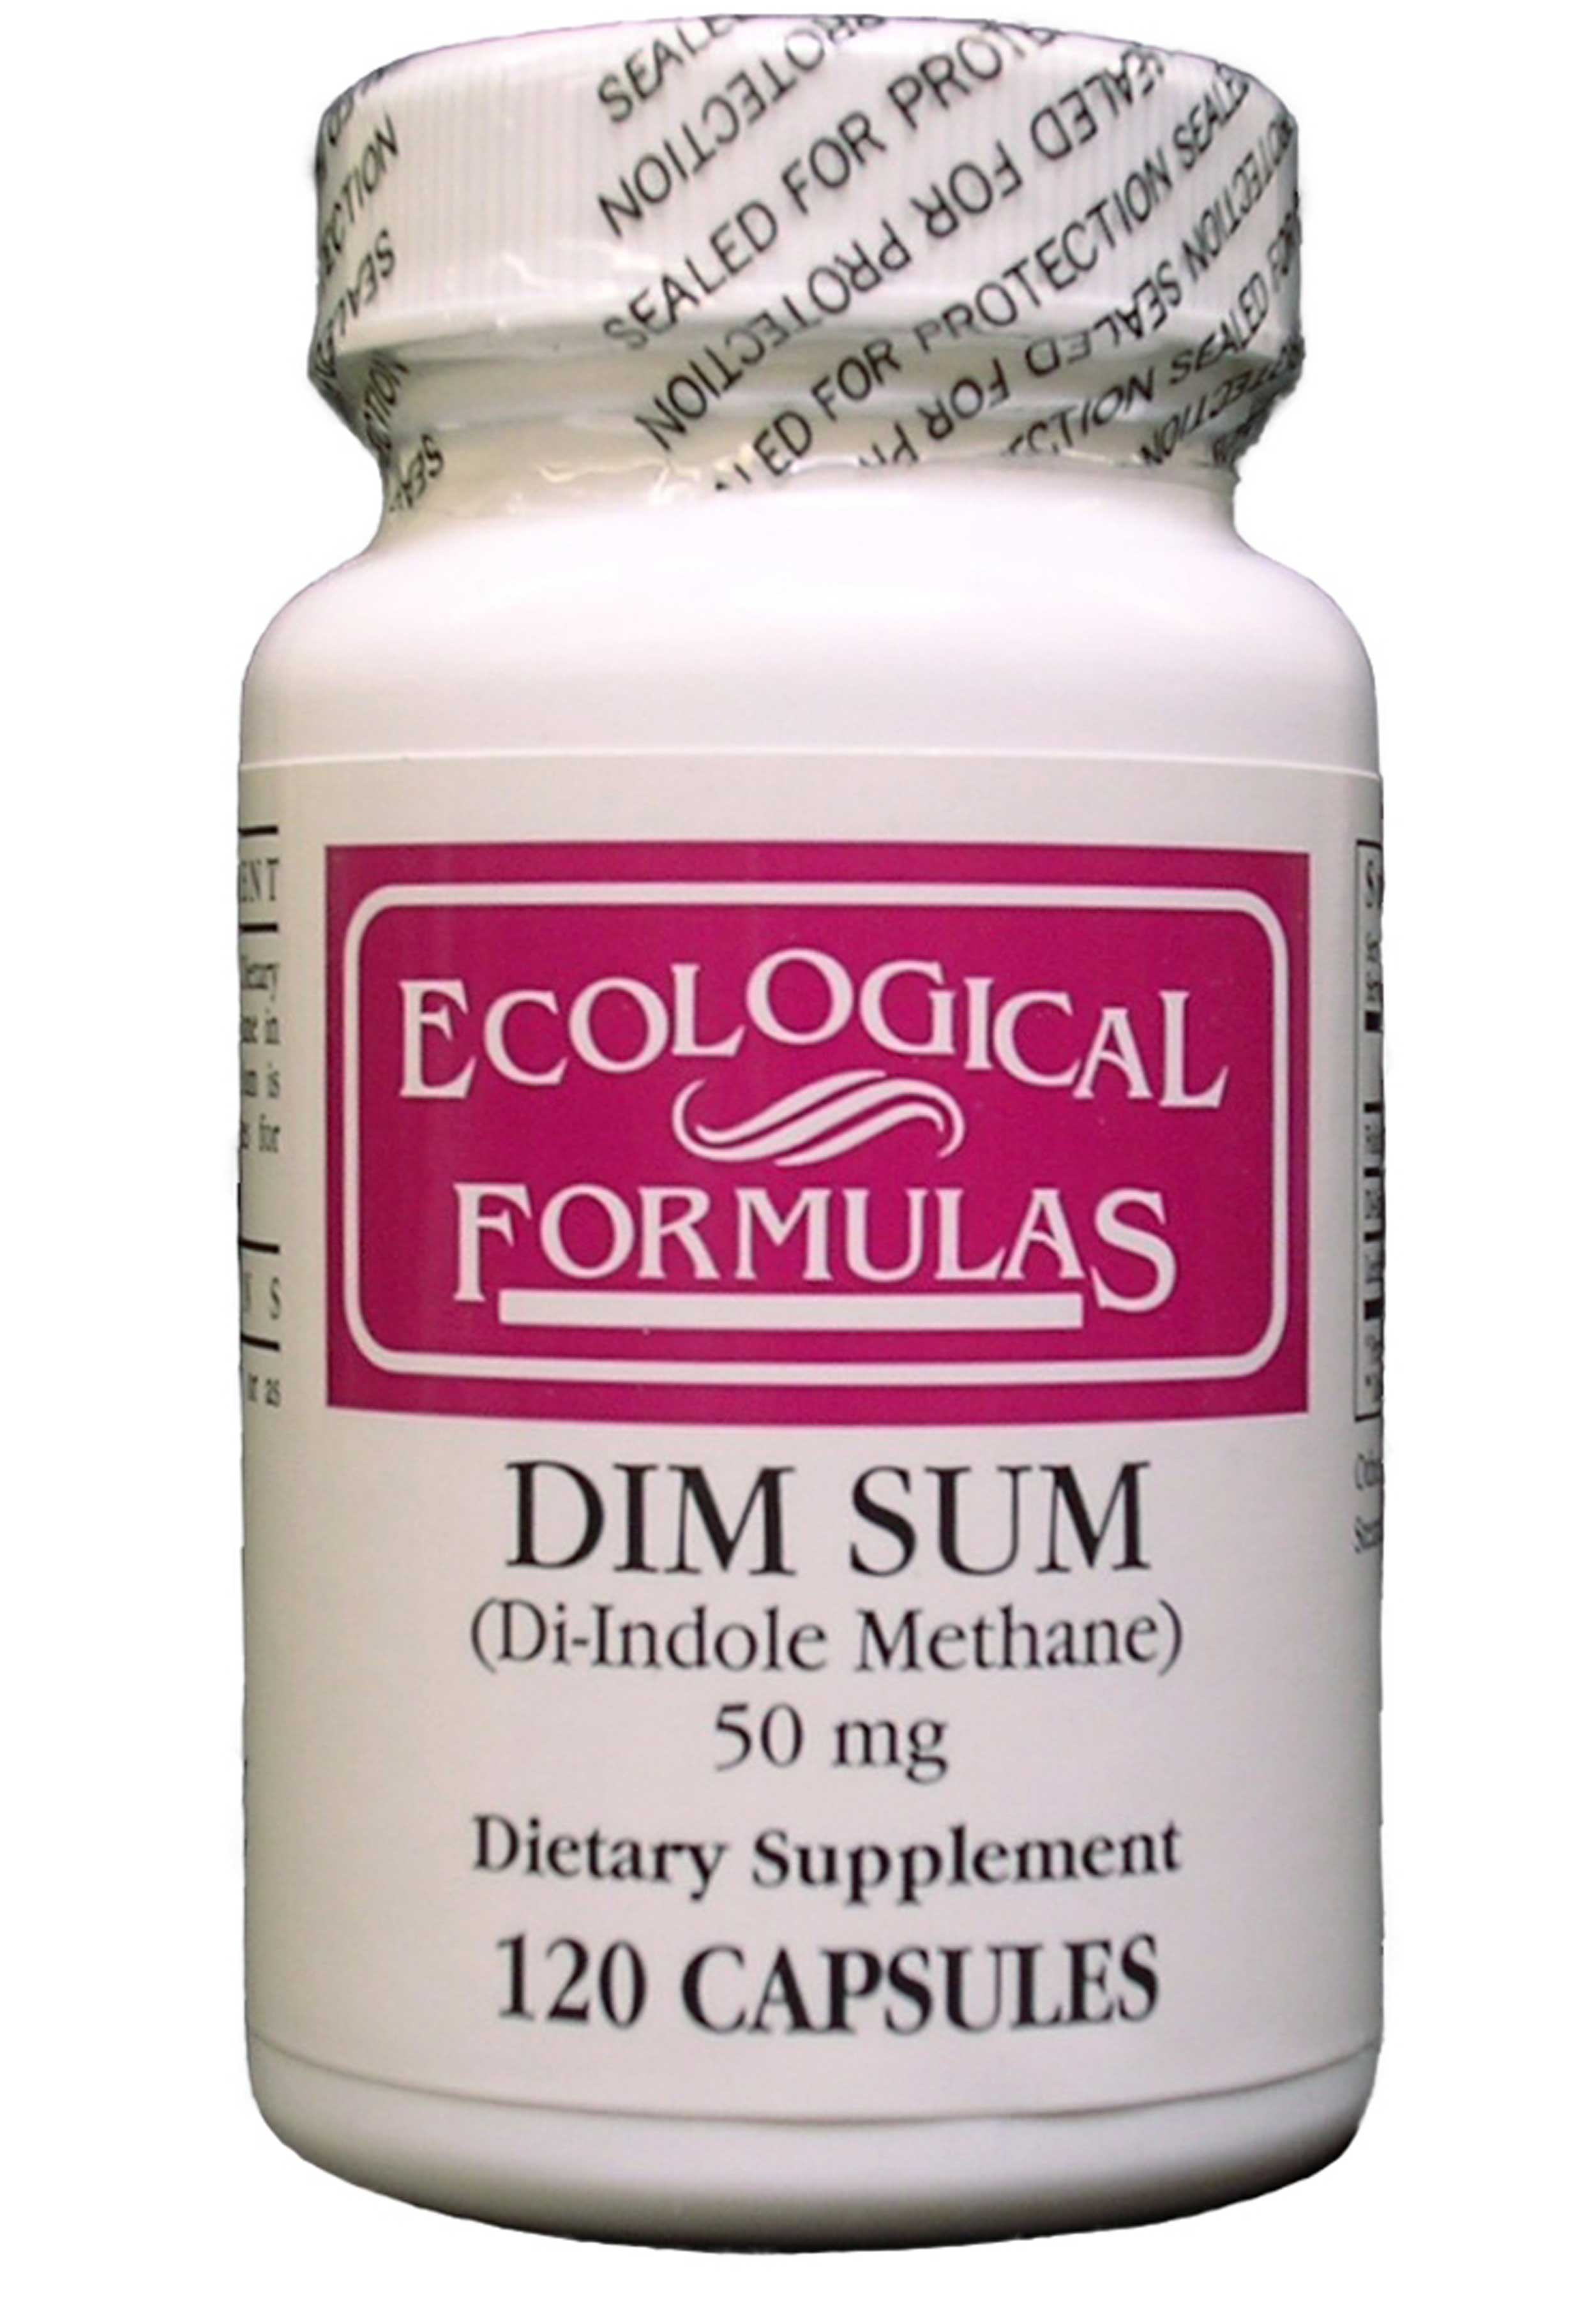 Ecological Formulas/Cardiovascular Research Dim Sum